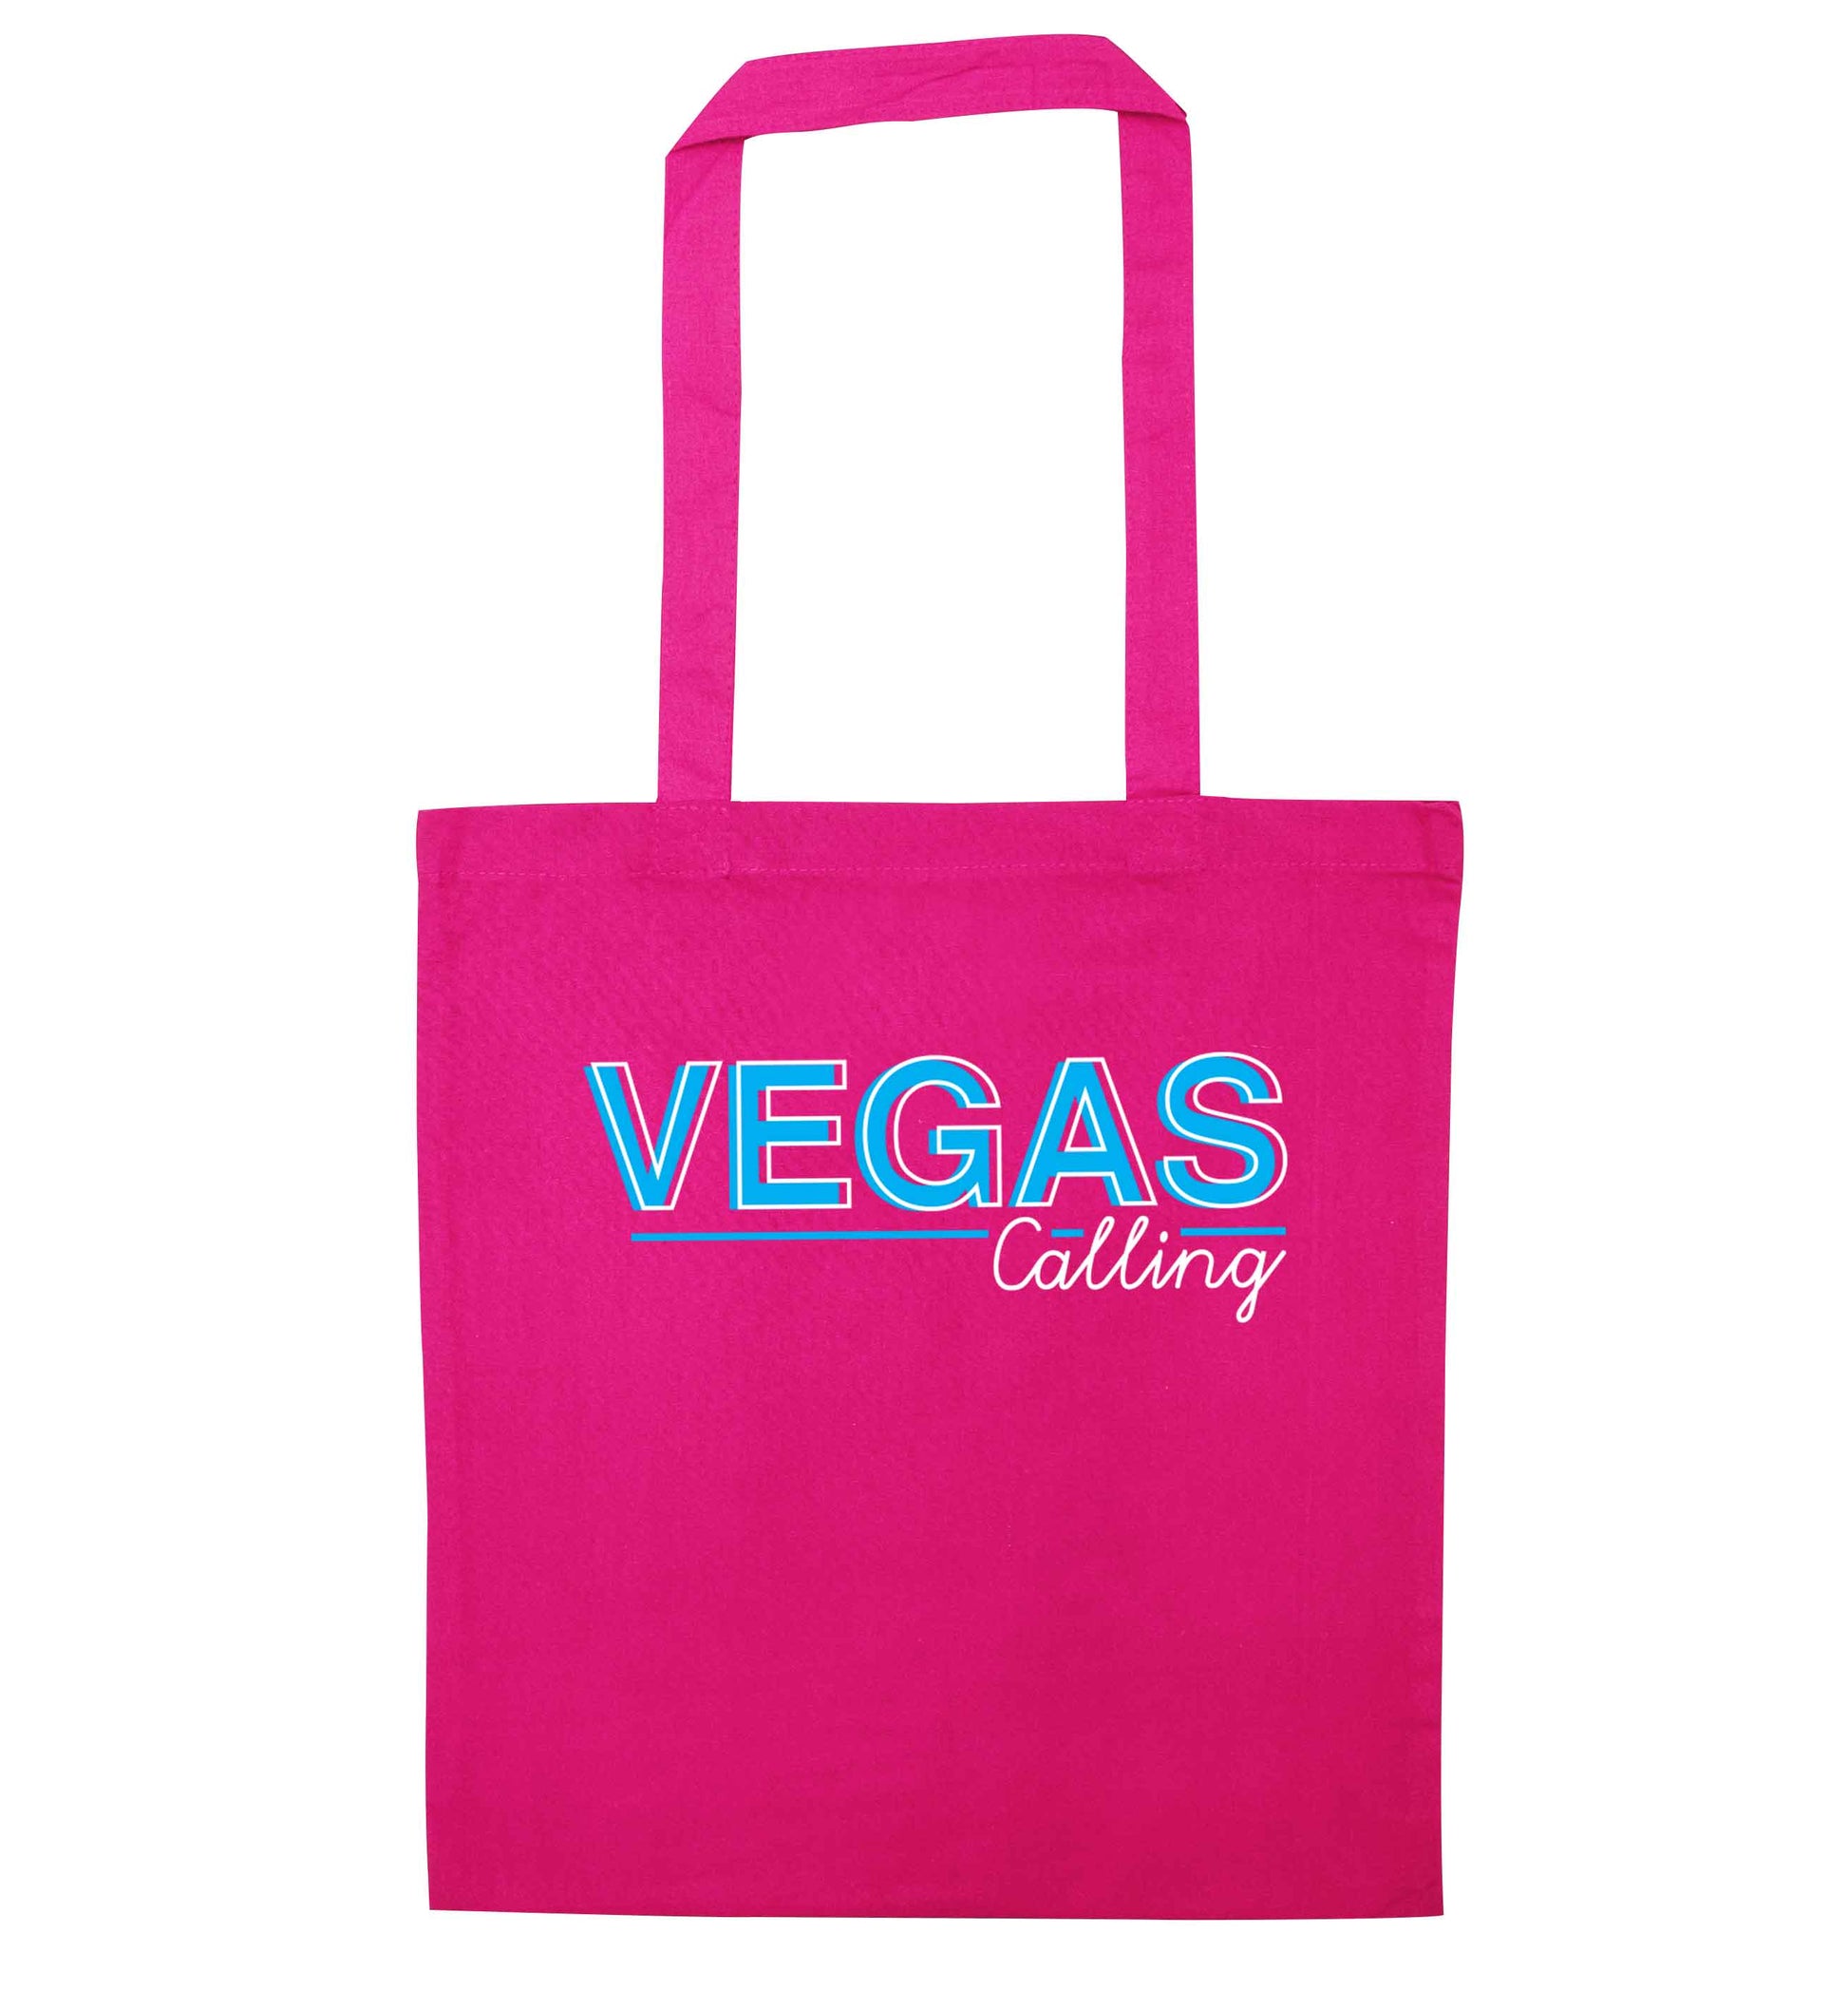 Vegas calling pink tote bag